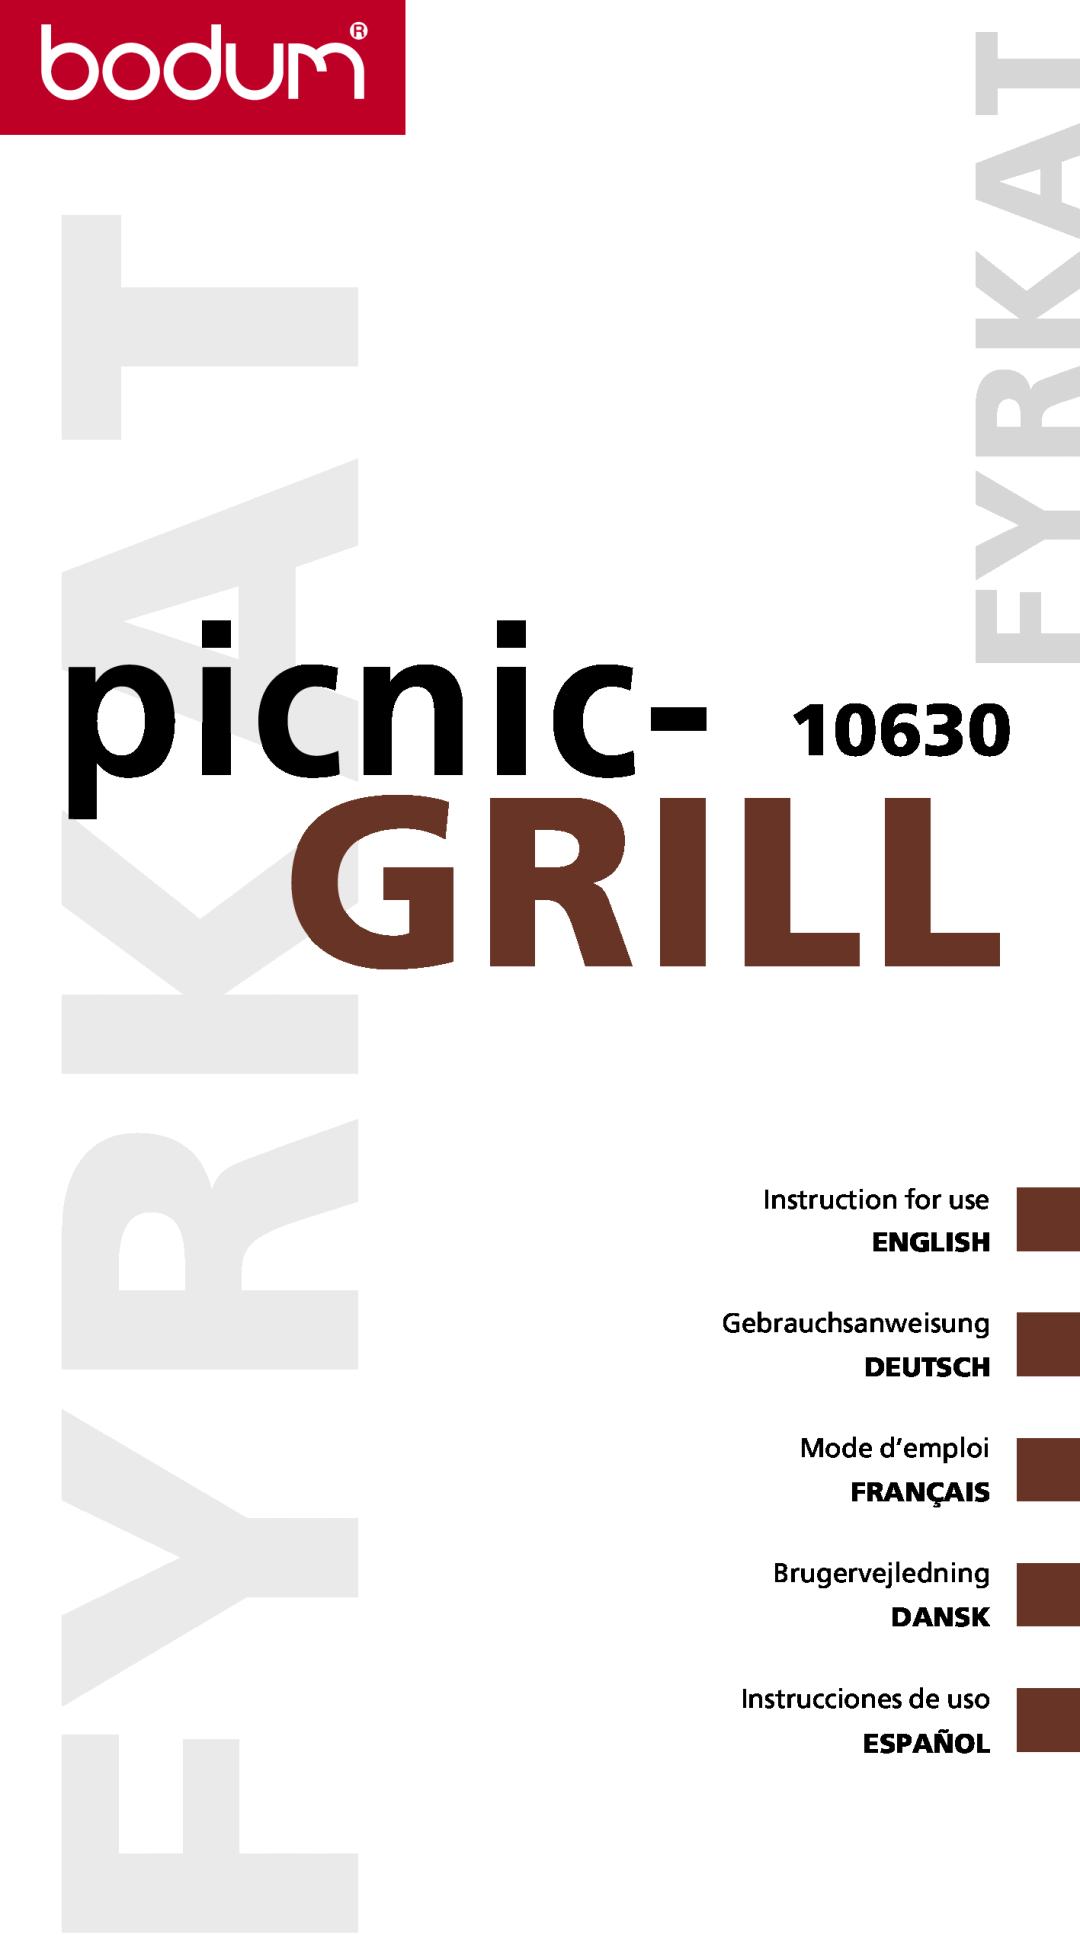 Bodum 10630 manual fyrkatfyrkat, grill, picnic, English, Deutsch, Français, Dansk, Español 